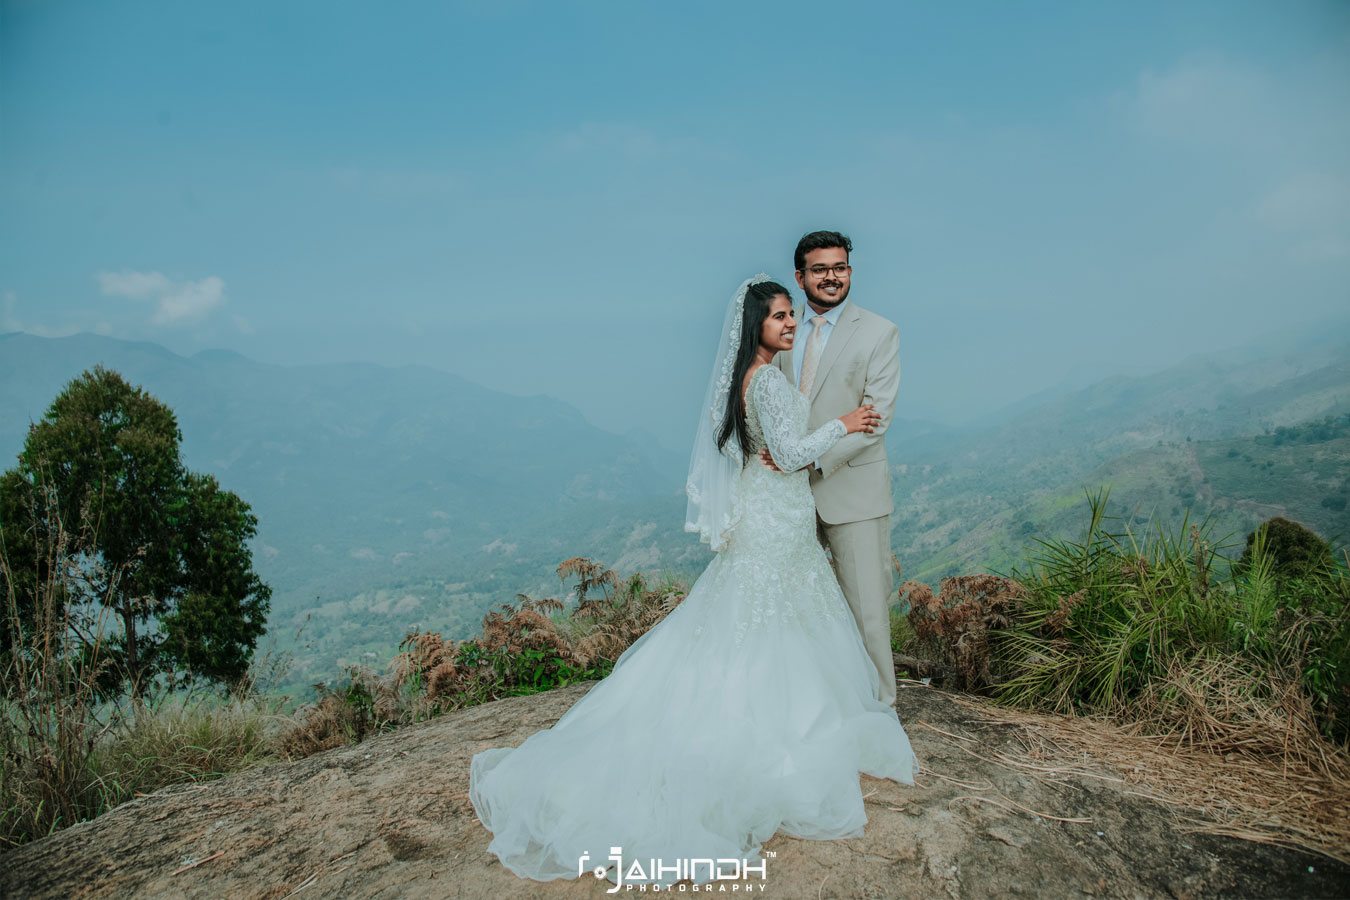 Jaihindh Photography: Celebrating Tirunelveli's Weddings, Every Portrait a  Memory | Professional Wedding Photographer Chennai, Madurai, Tirunelveli